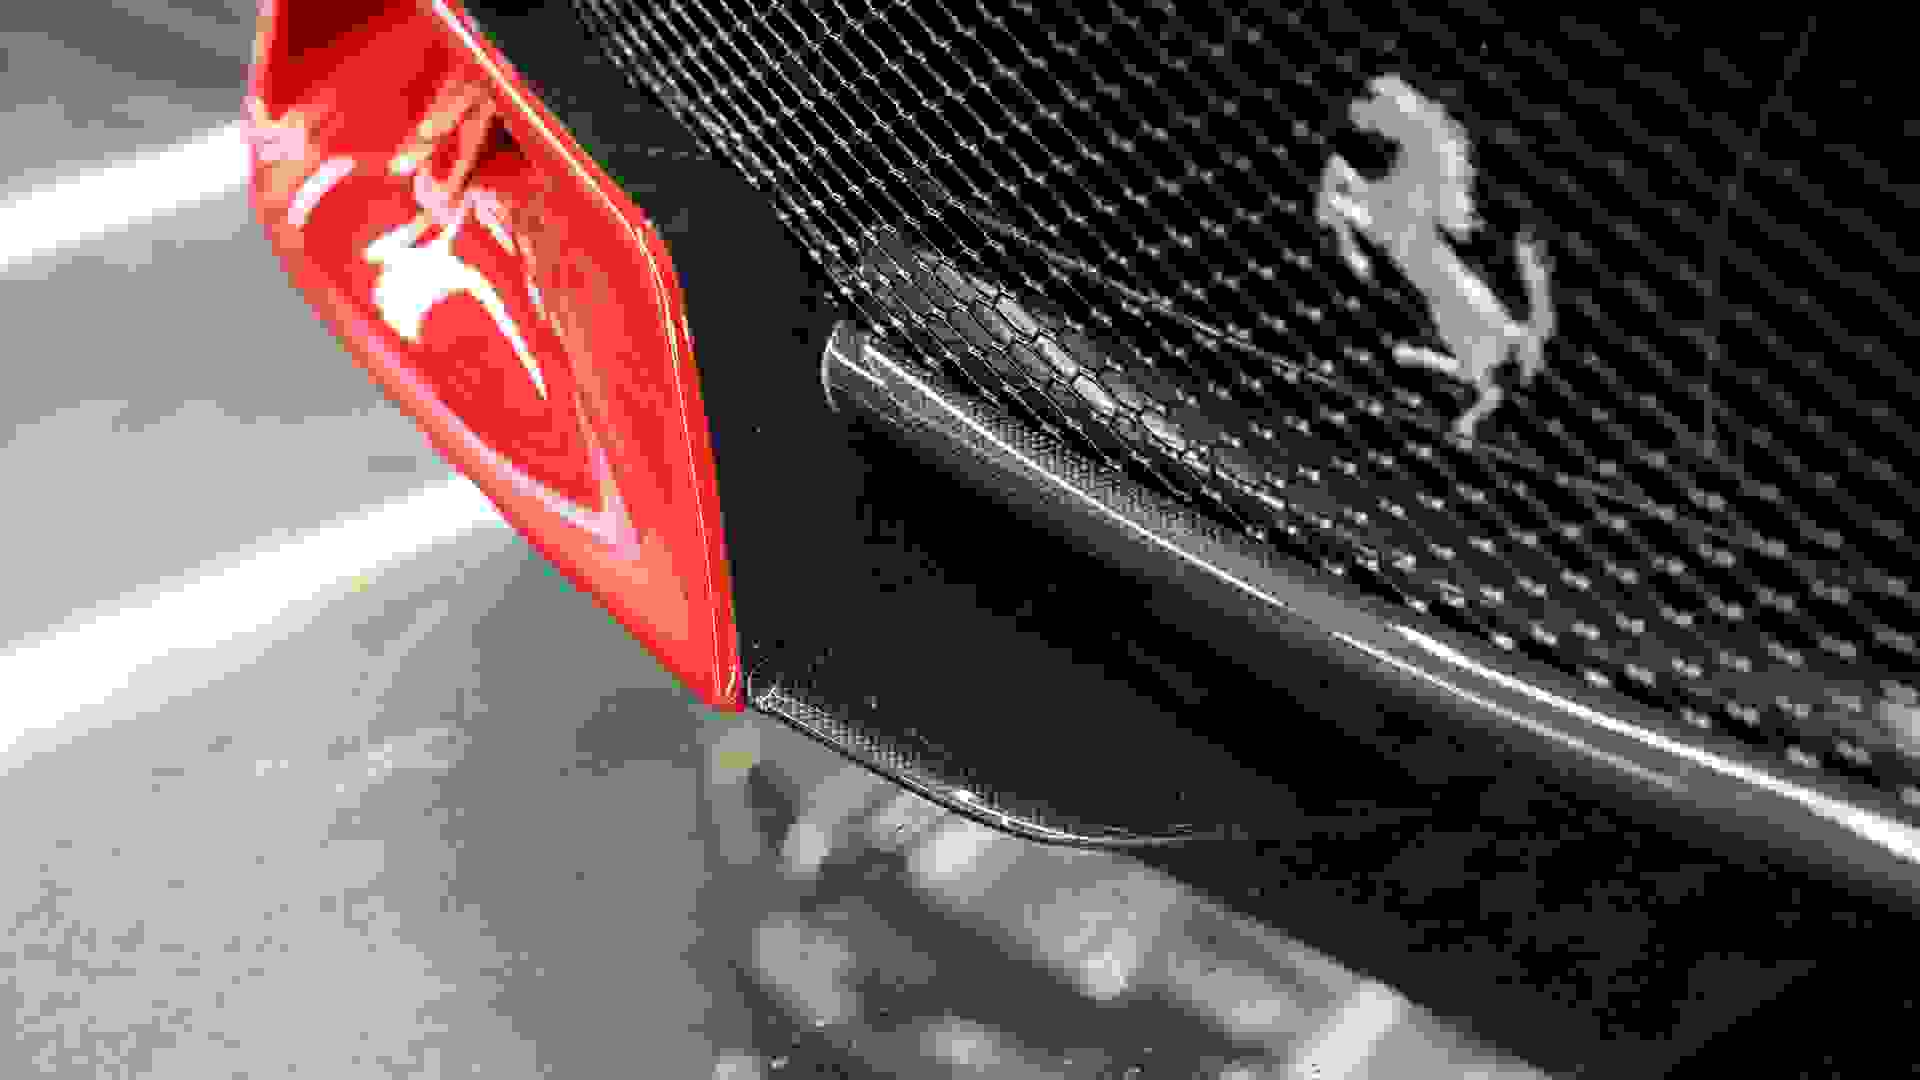 Ferrari F12 Photo 981ecc38-4bdd-44be-9579-5cc57418abd0.jpg